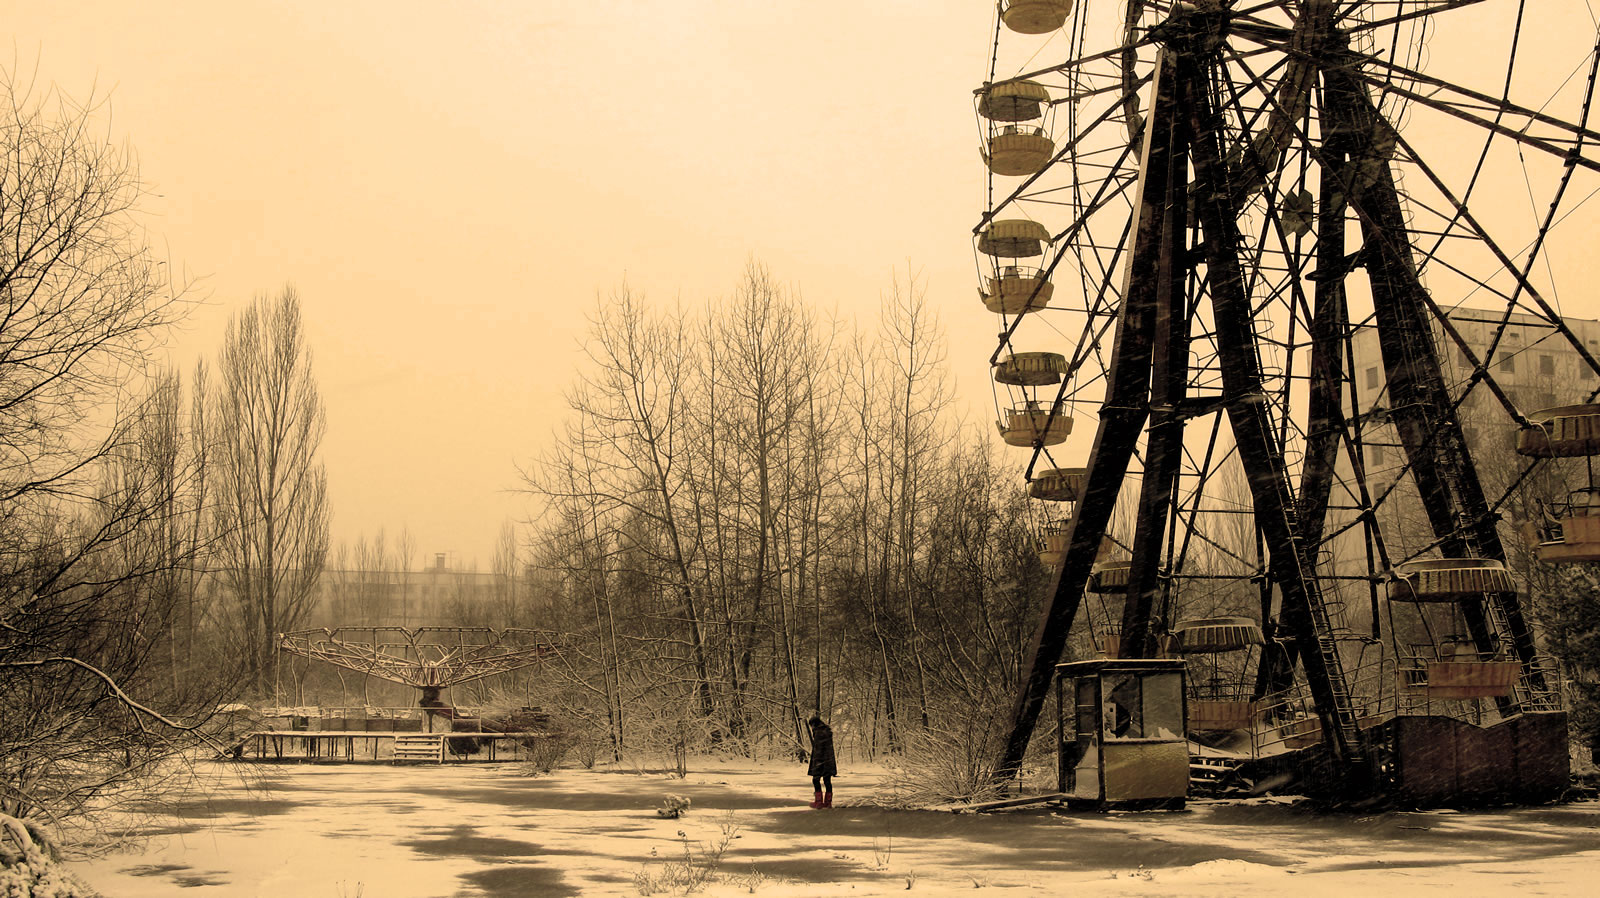 chernobyl, man made, ferris wheel iphone wallpaper